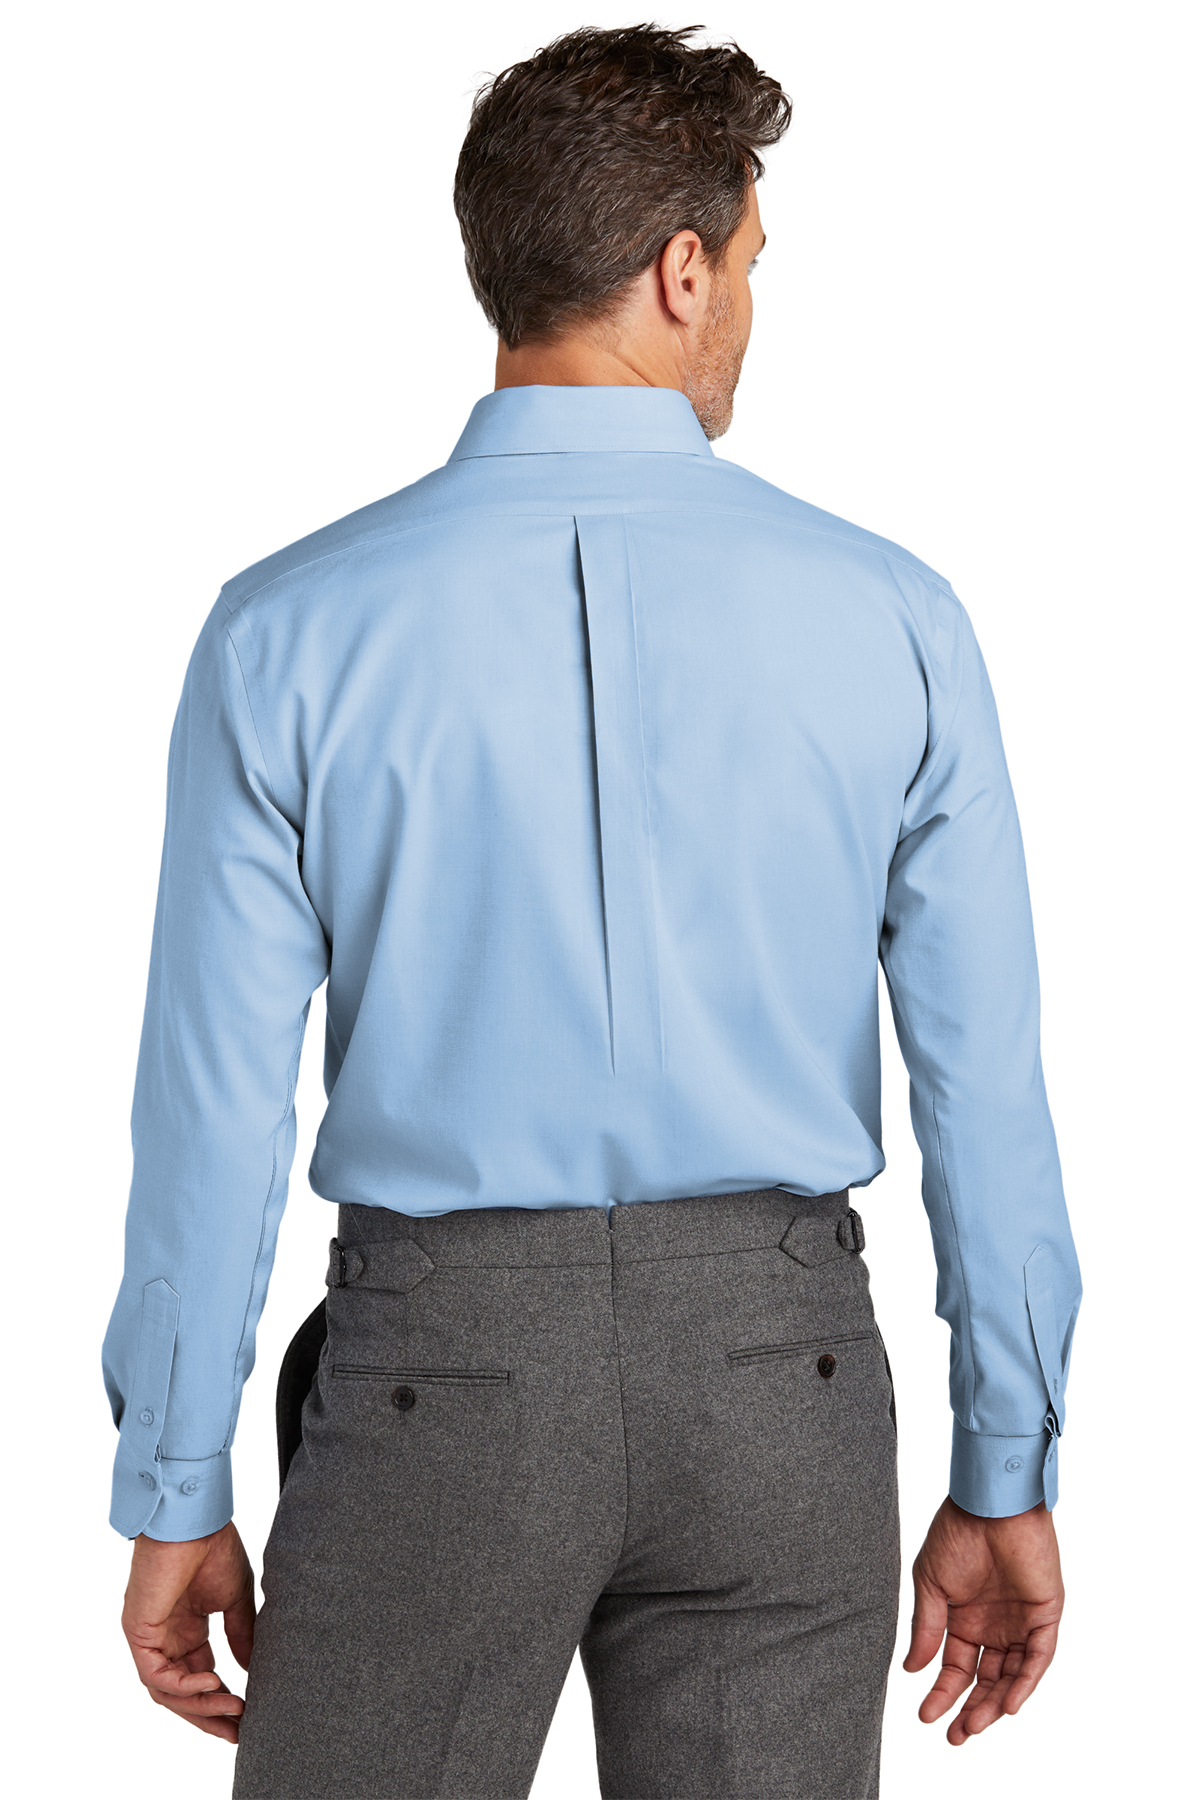 Brooks Brothers Wrinkle-Free Stretch Nailhead Shirt | Product | SanMar